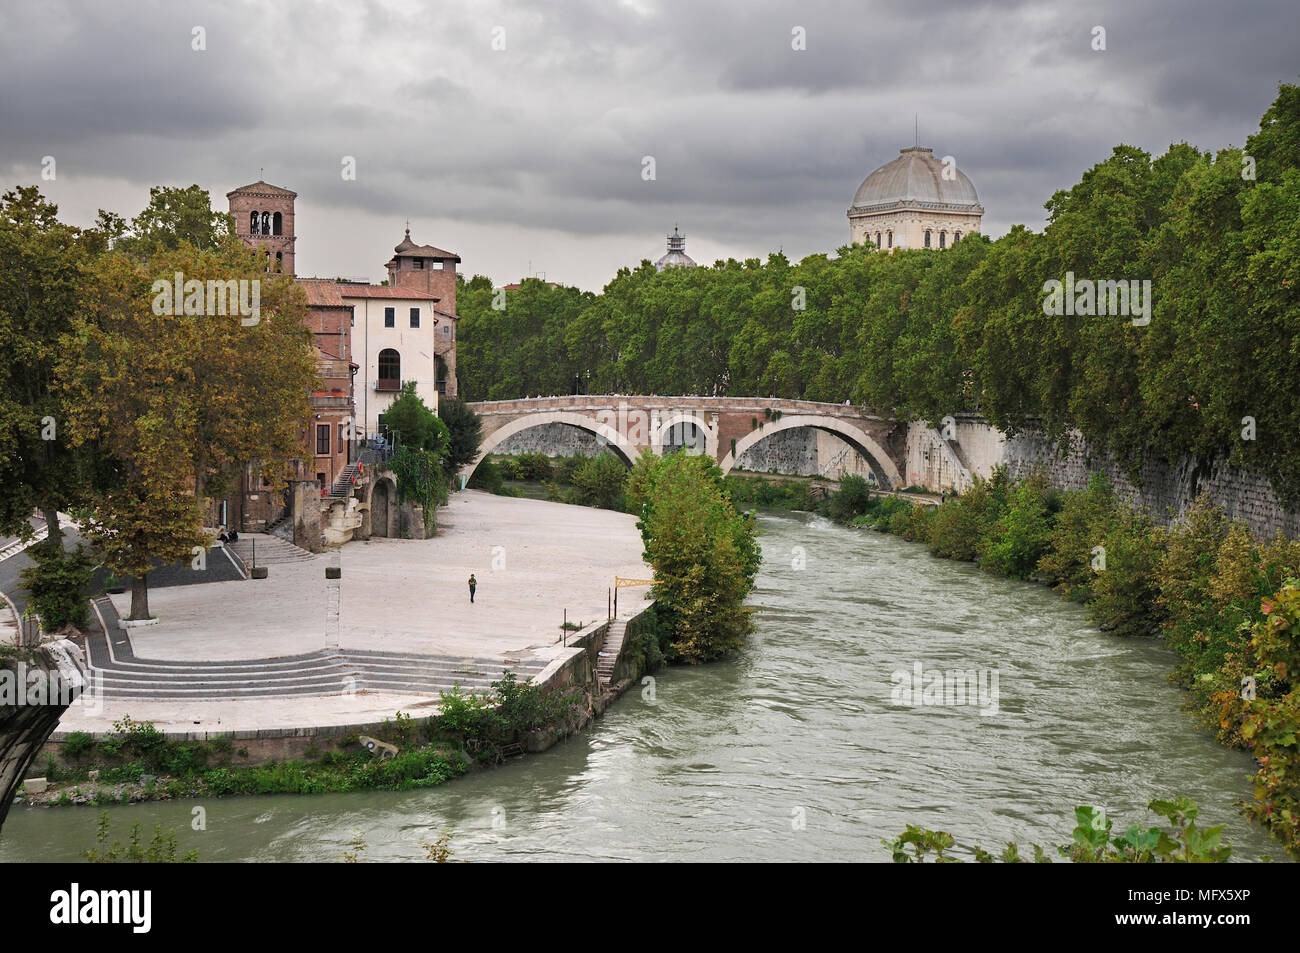 Tiber island (Isola Tiberina) and an old bridge over the river Tiber. Rome, Italy Stock Photo